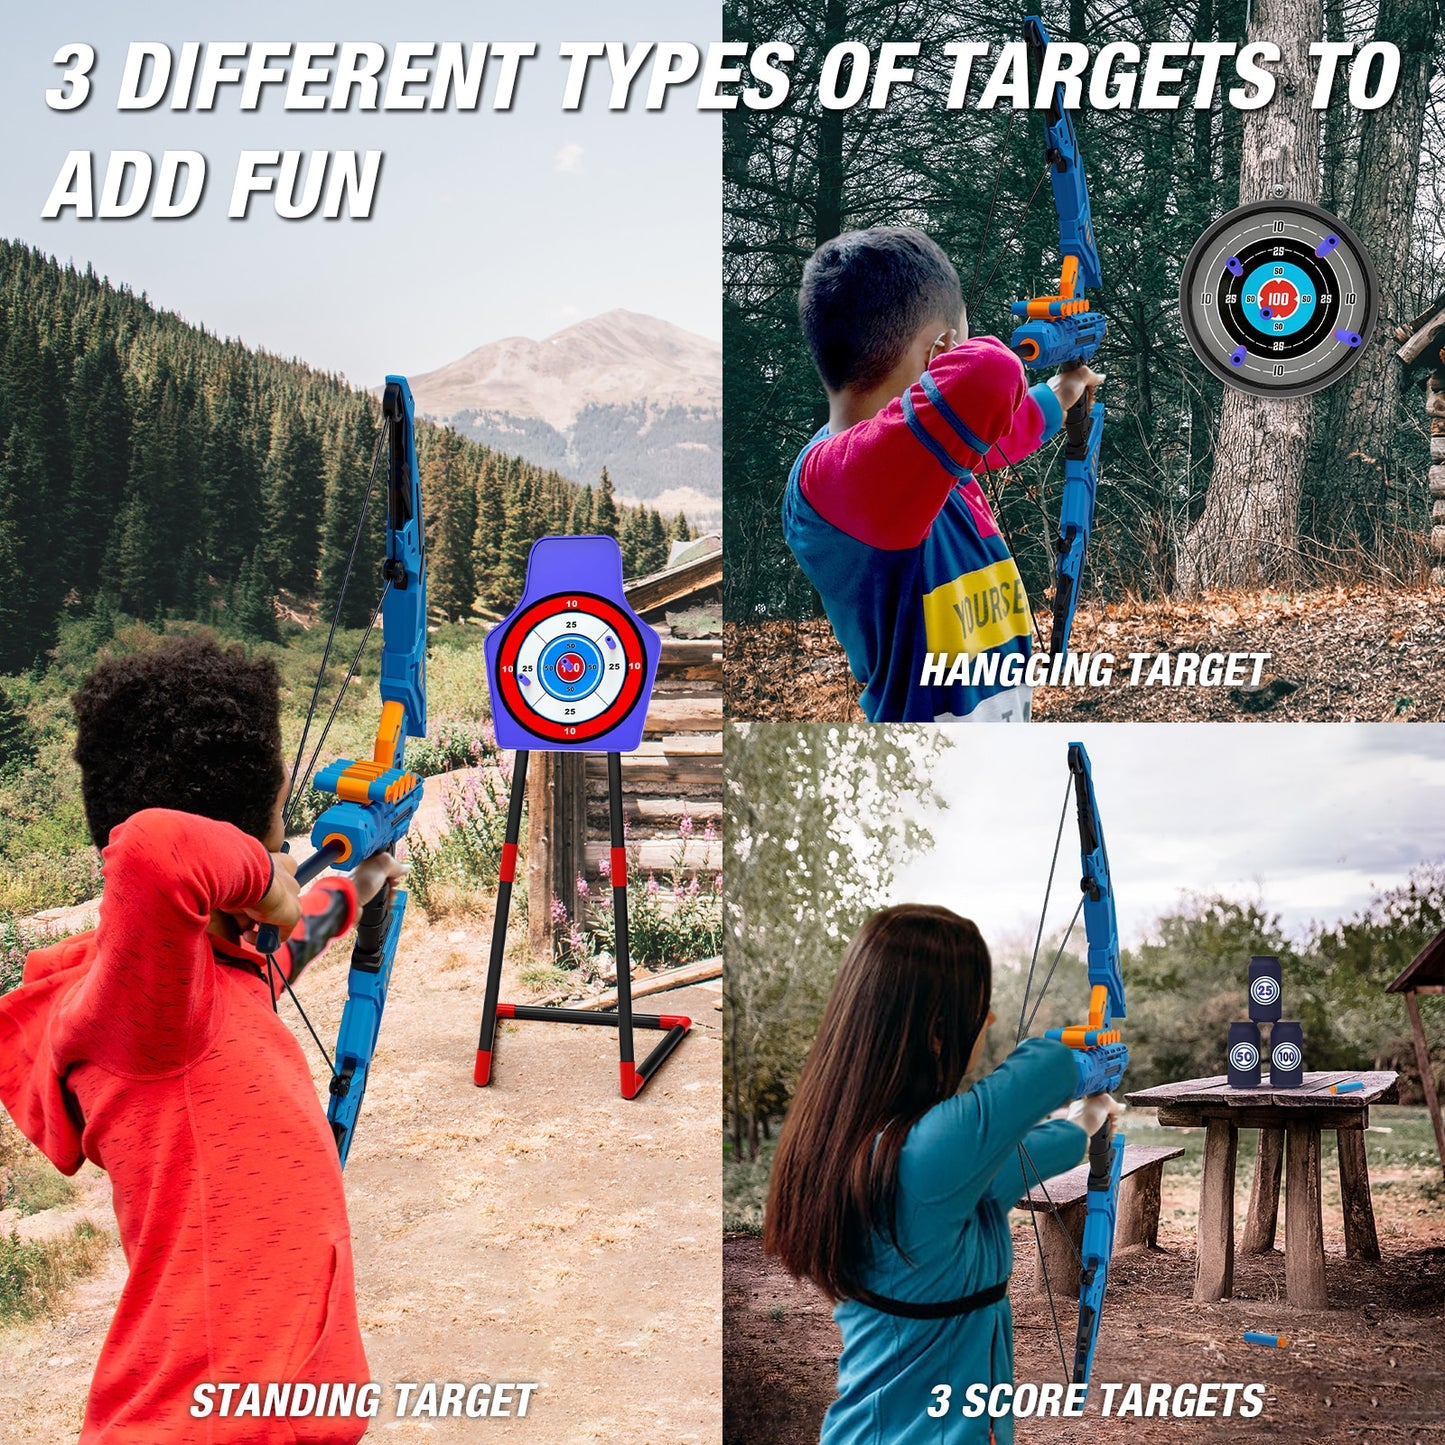 QDRAGON Light-up Archery Set for Kids